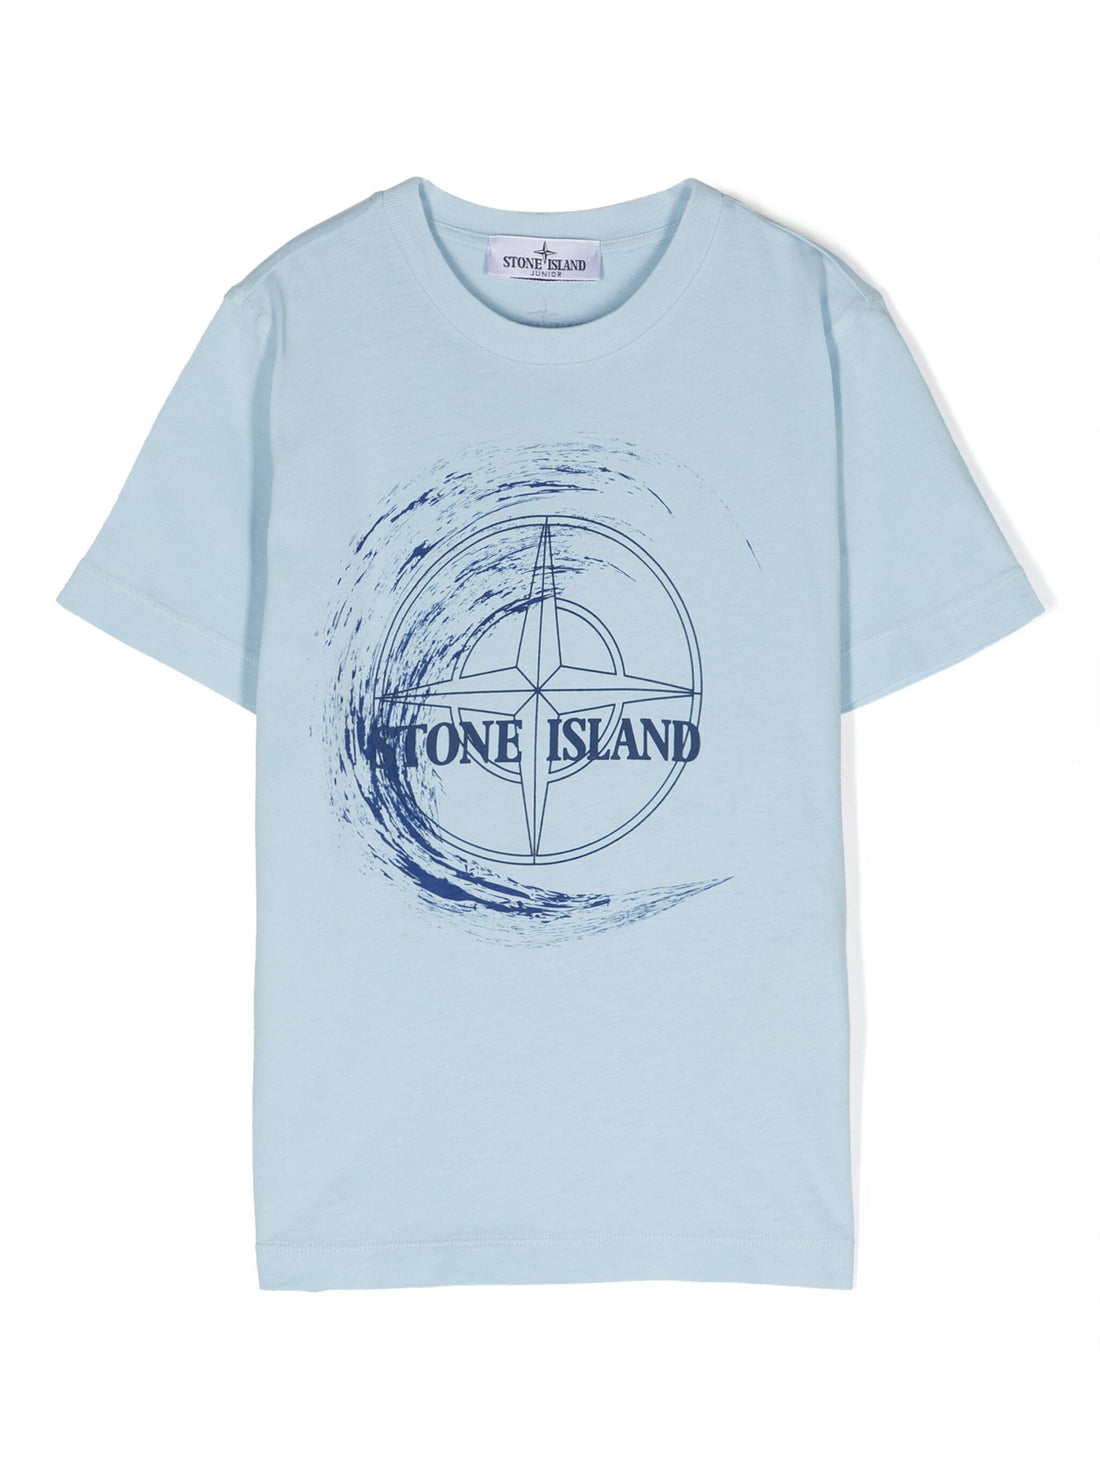 STONE ISLAND KIDS Compass Logo Graphic Print Cotton T-Shirt Light Blue - MAISONDEFASHION.COM